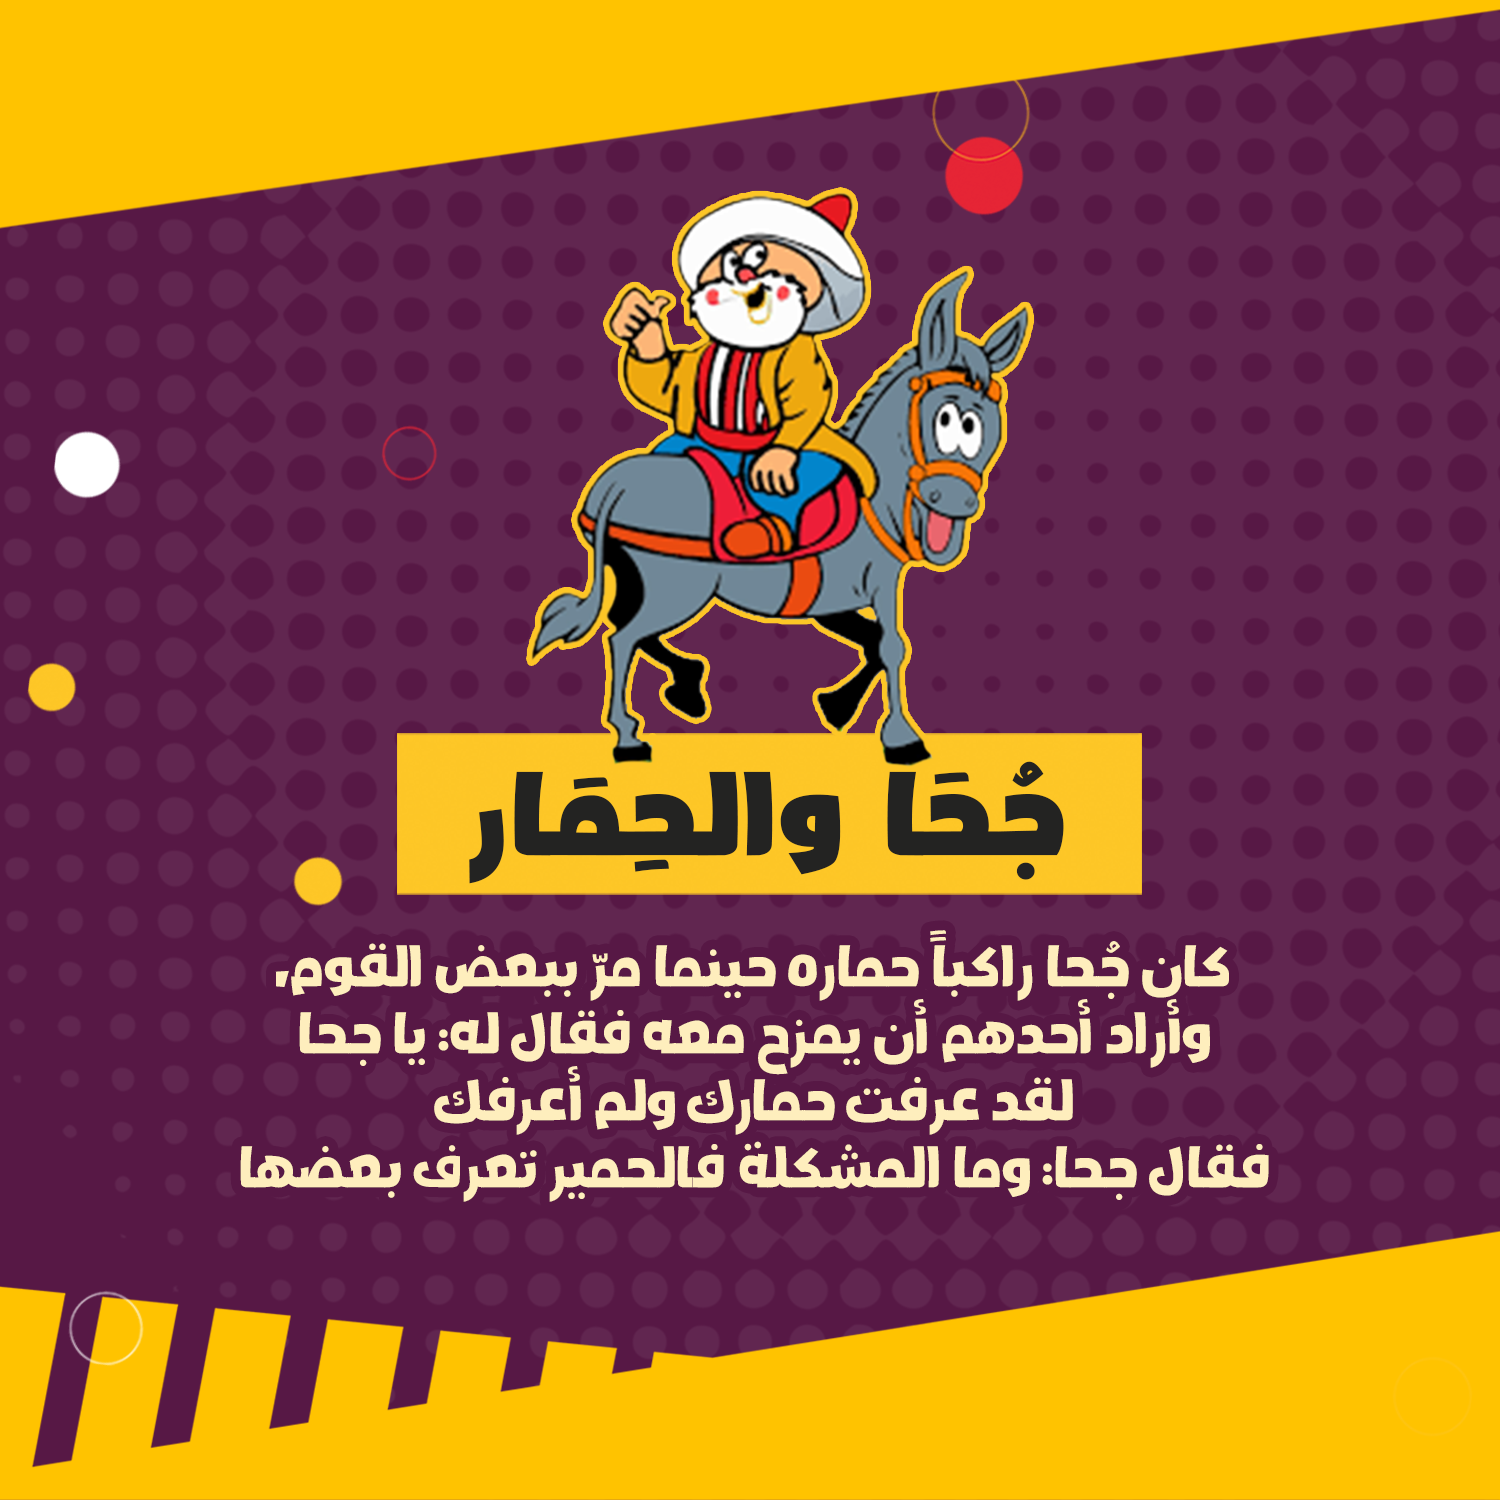 DG Bebo Free Arabic Font - arabic